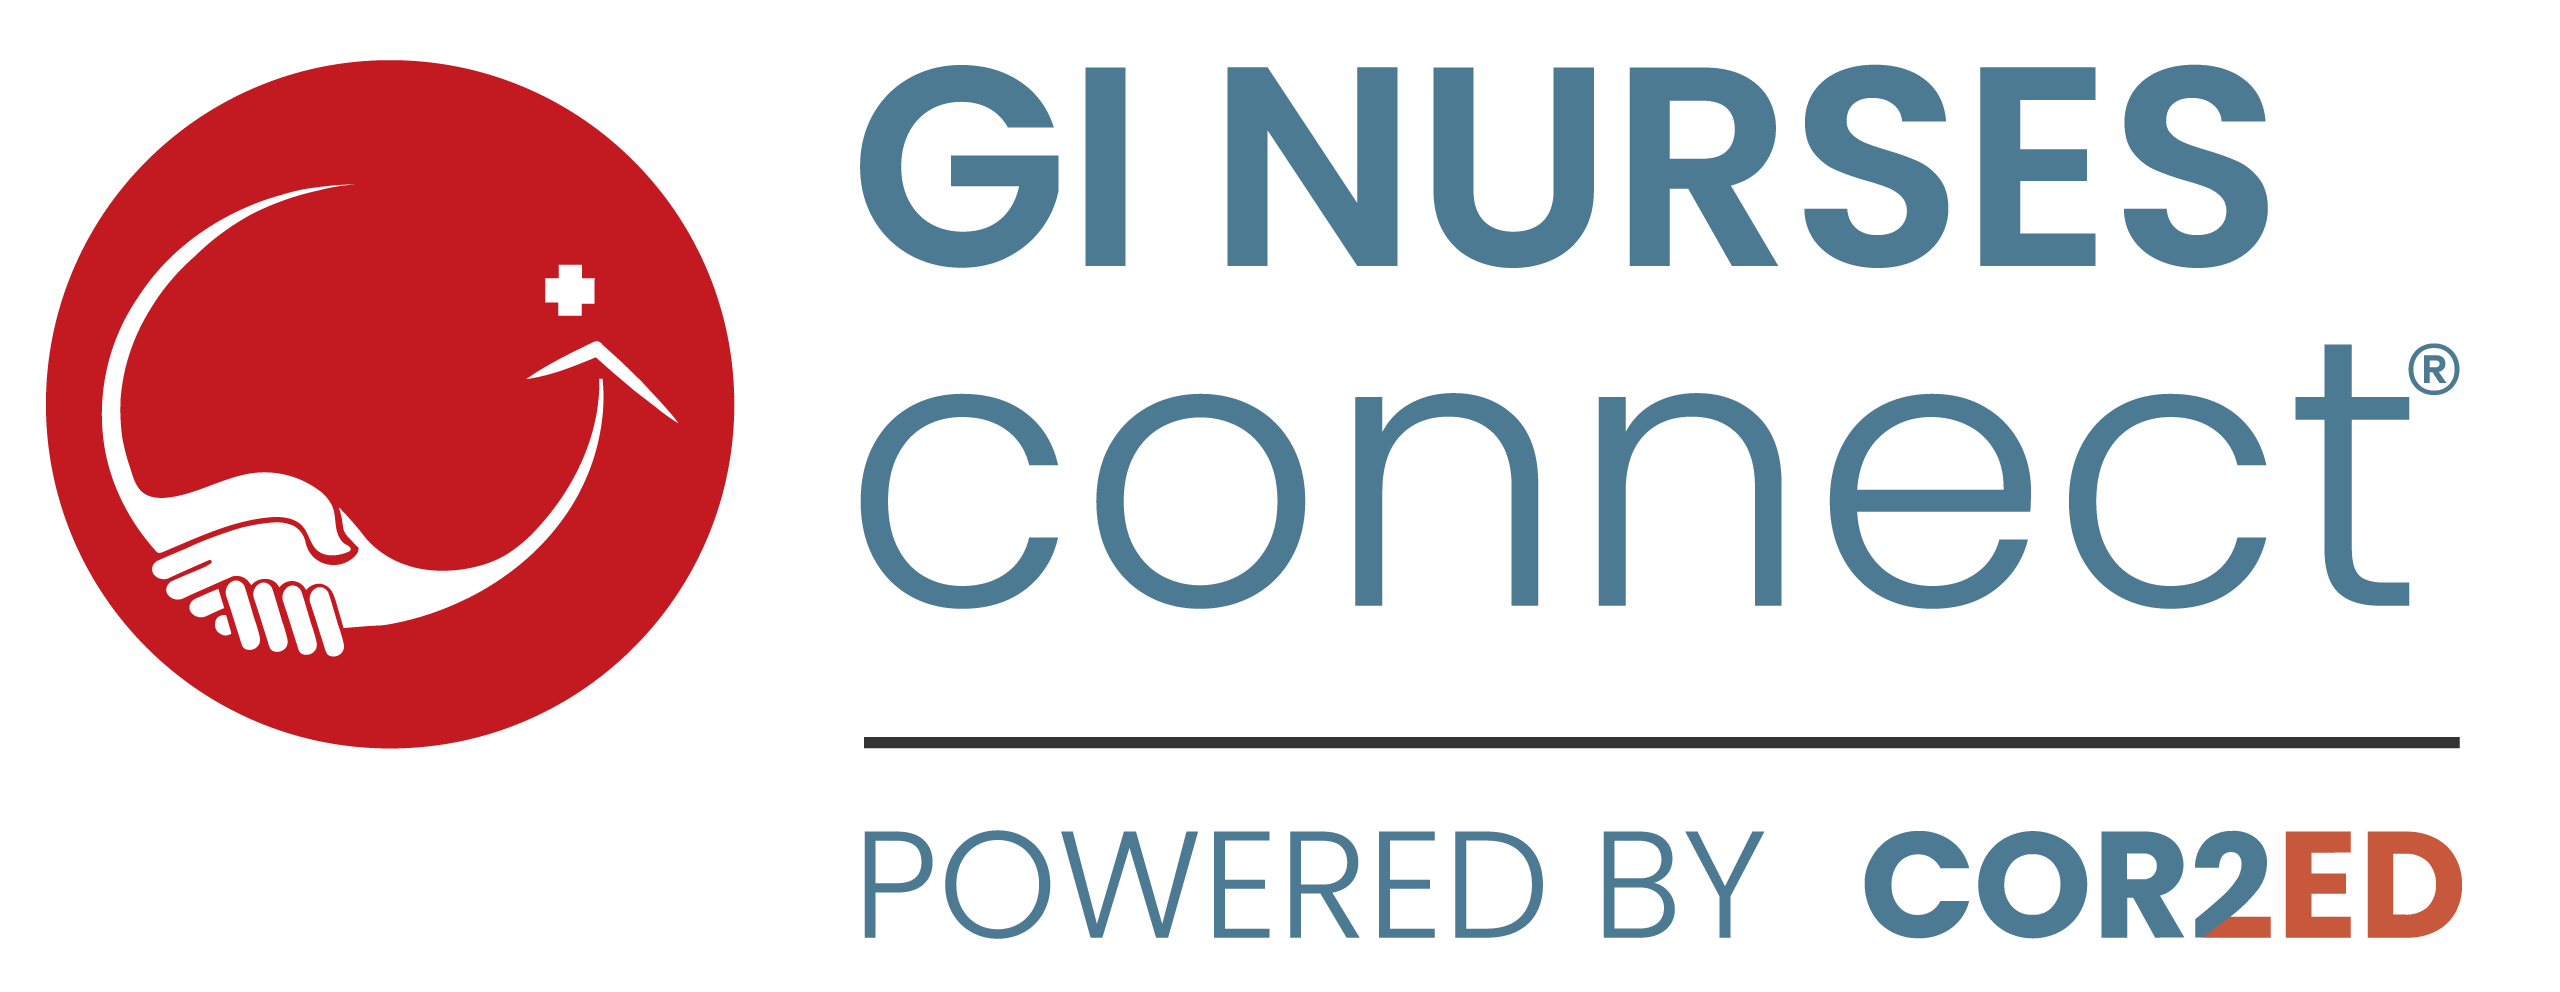 gi-nurses-connect-logo